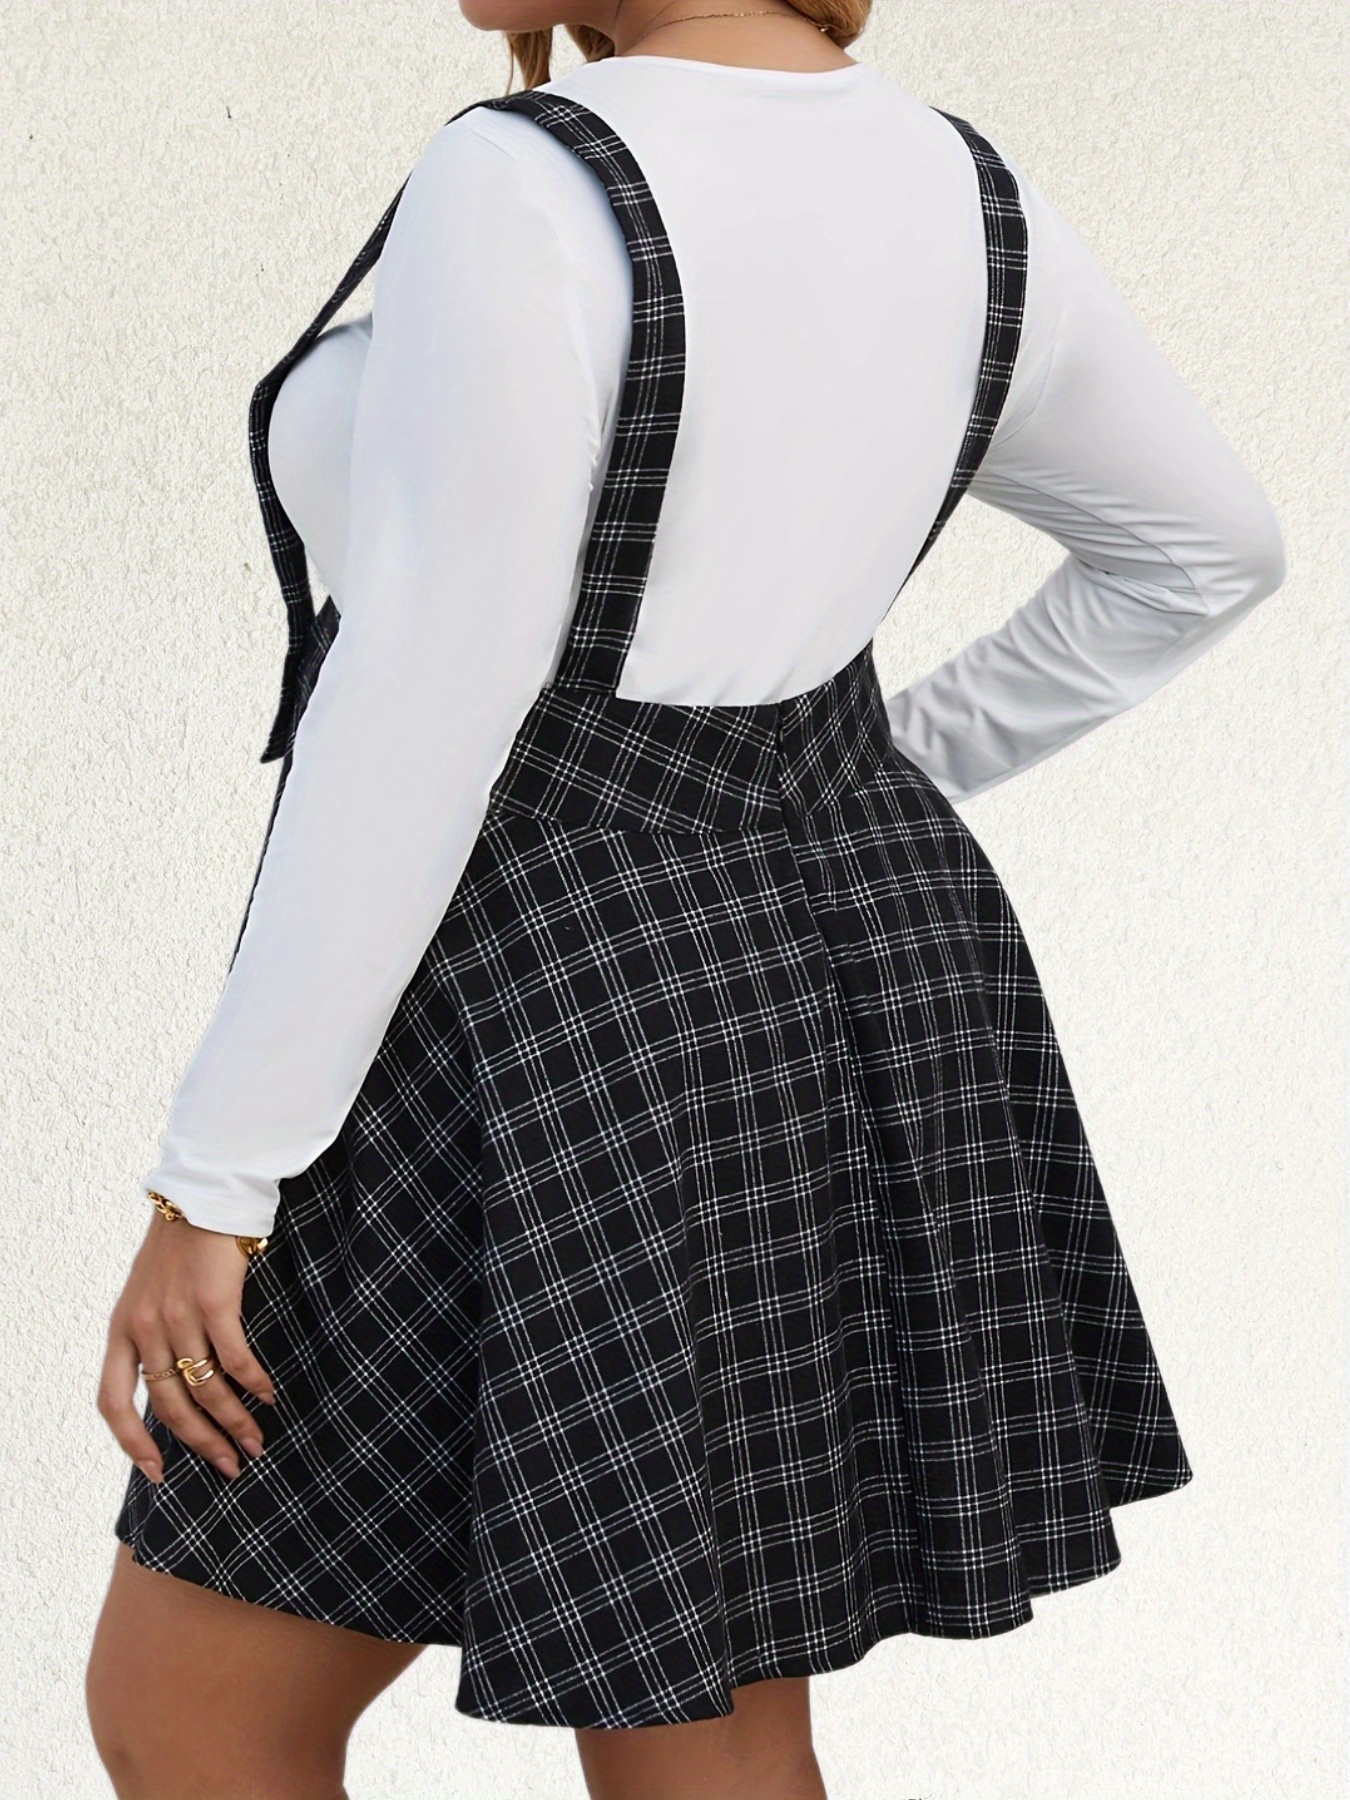 Youth Samantha Suspender Skirt